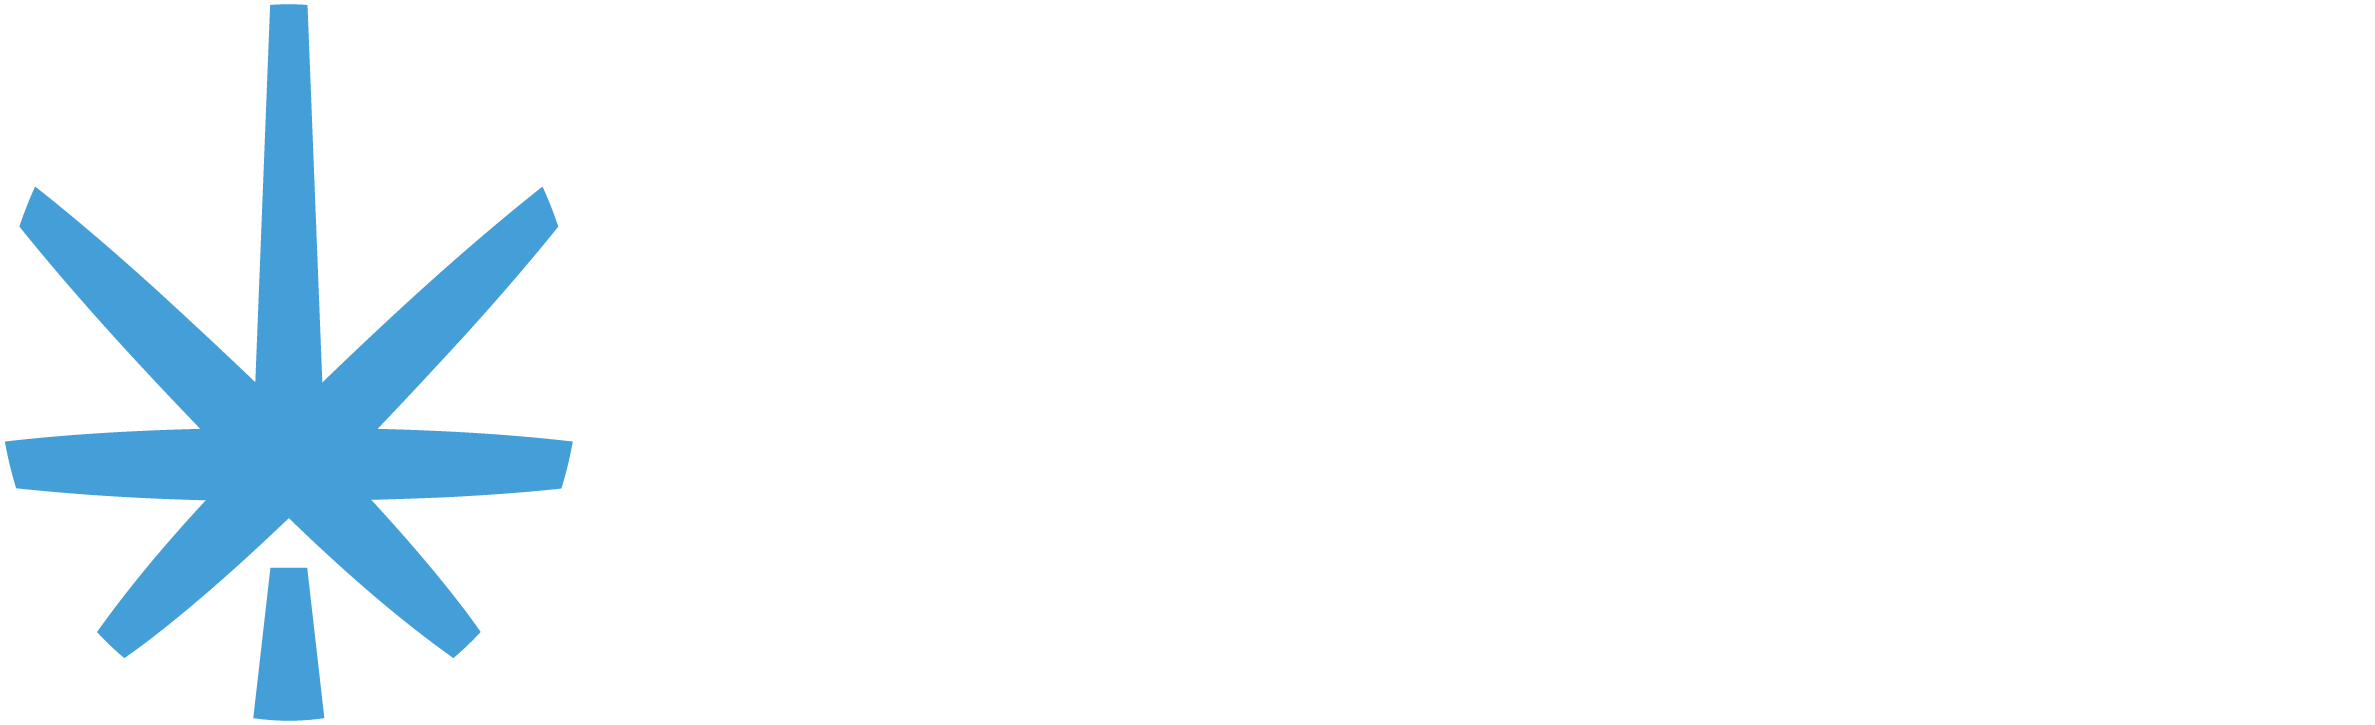 National Cannabis Study version of the CHRI logo